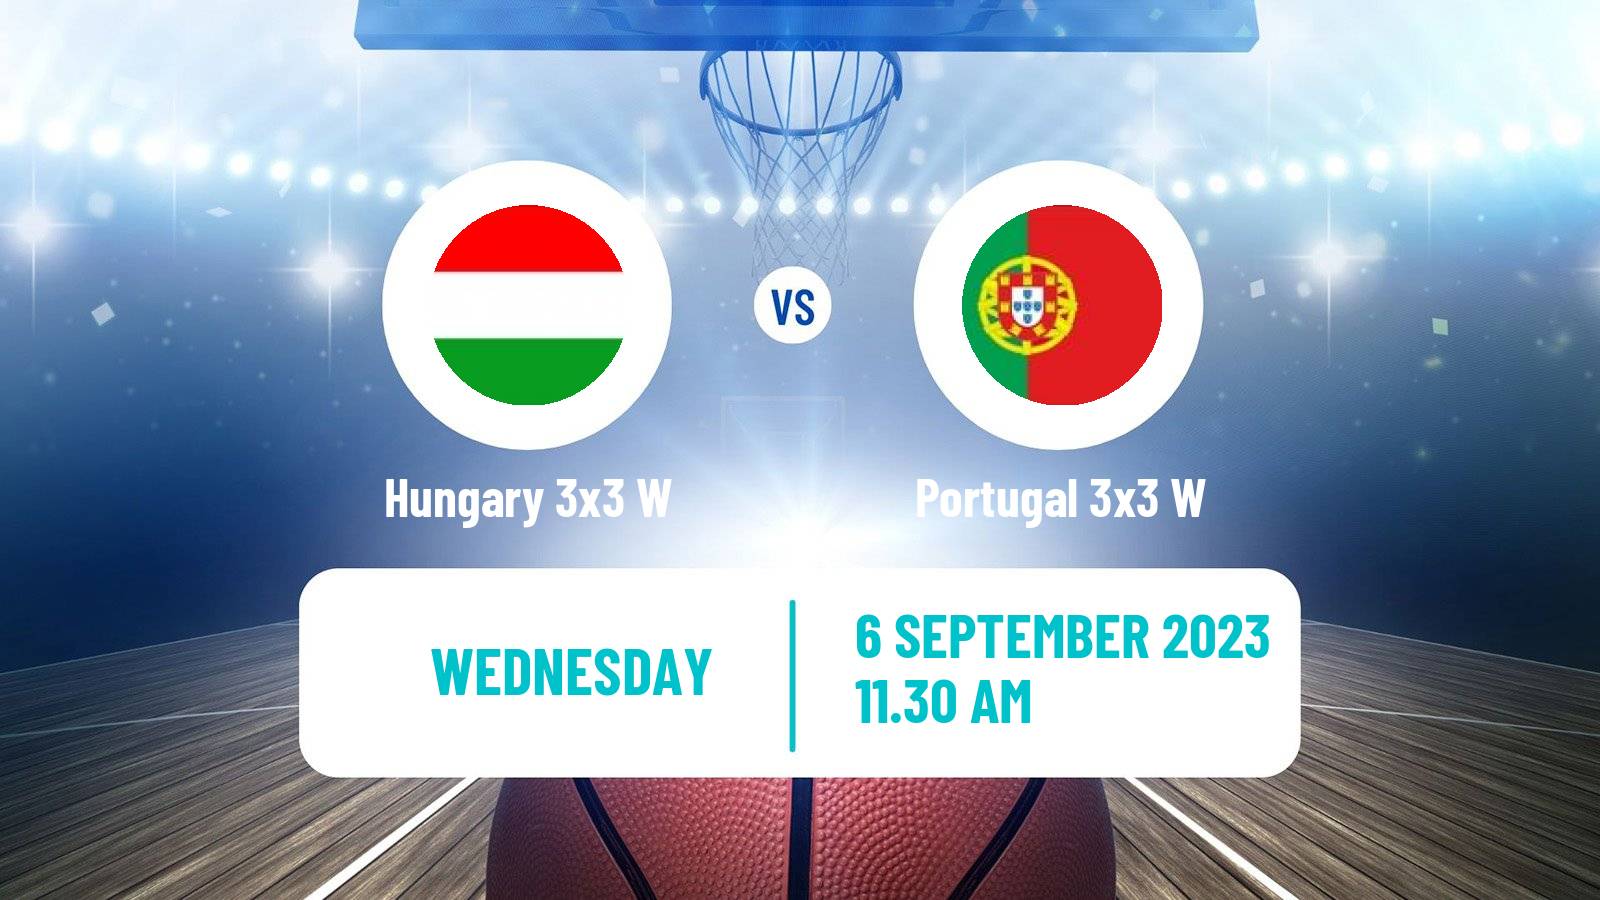 Basketball Europe Cup Basketball 3x3 Women Hungary 3x3 W - Portugal 3x3 W